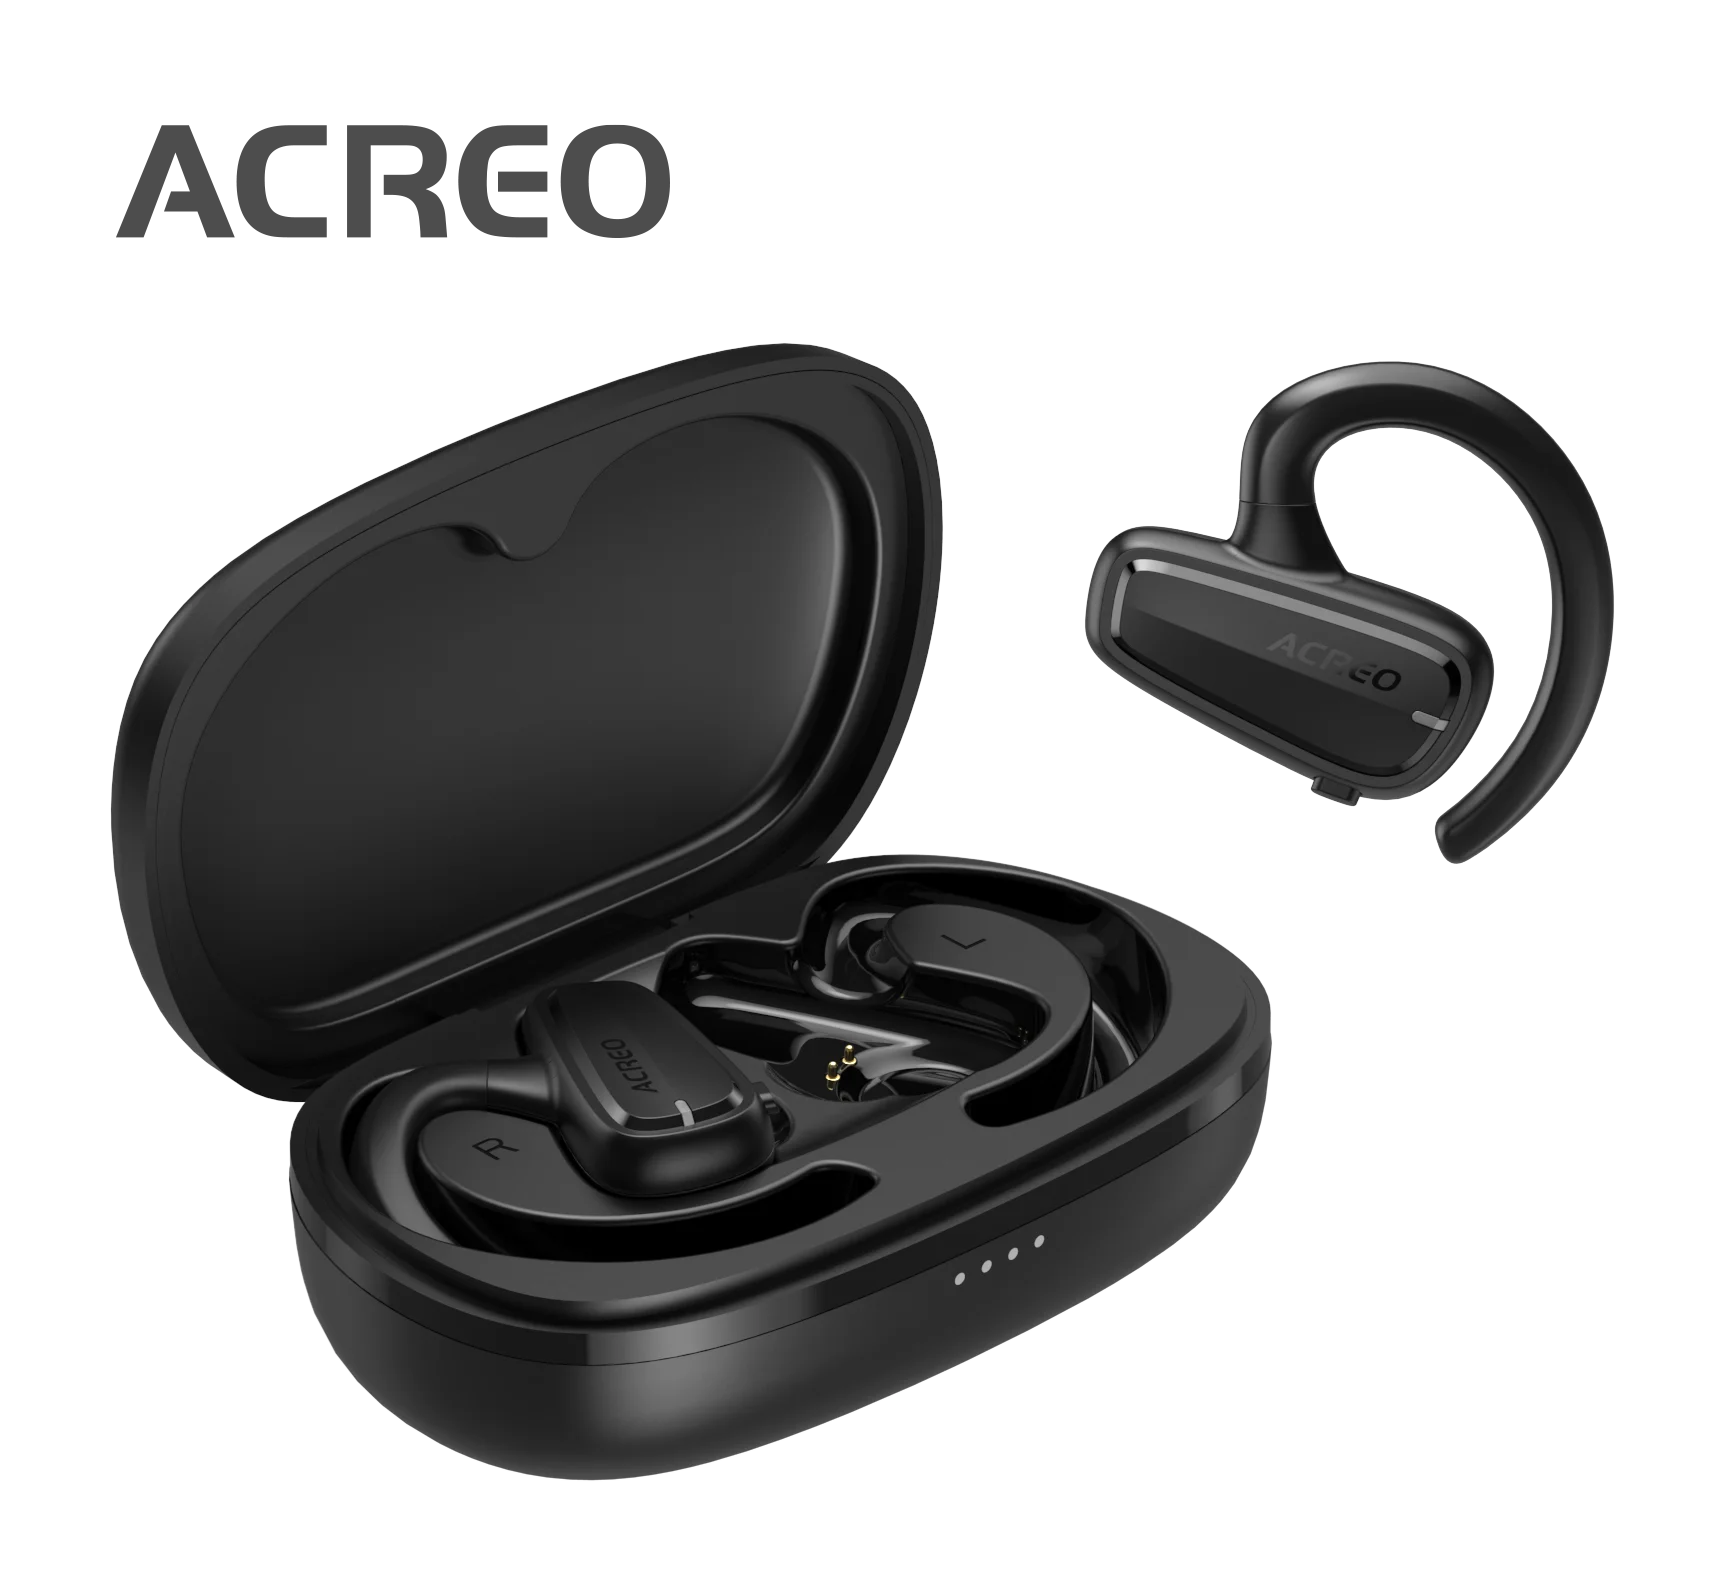 ACREO Open Ear TWS Bluetooth Headphones Wireless Charging Case Bass Sounds IPX5 Waterproof Sports earphones Free shipping enlarge